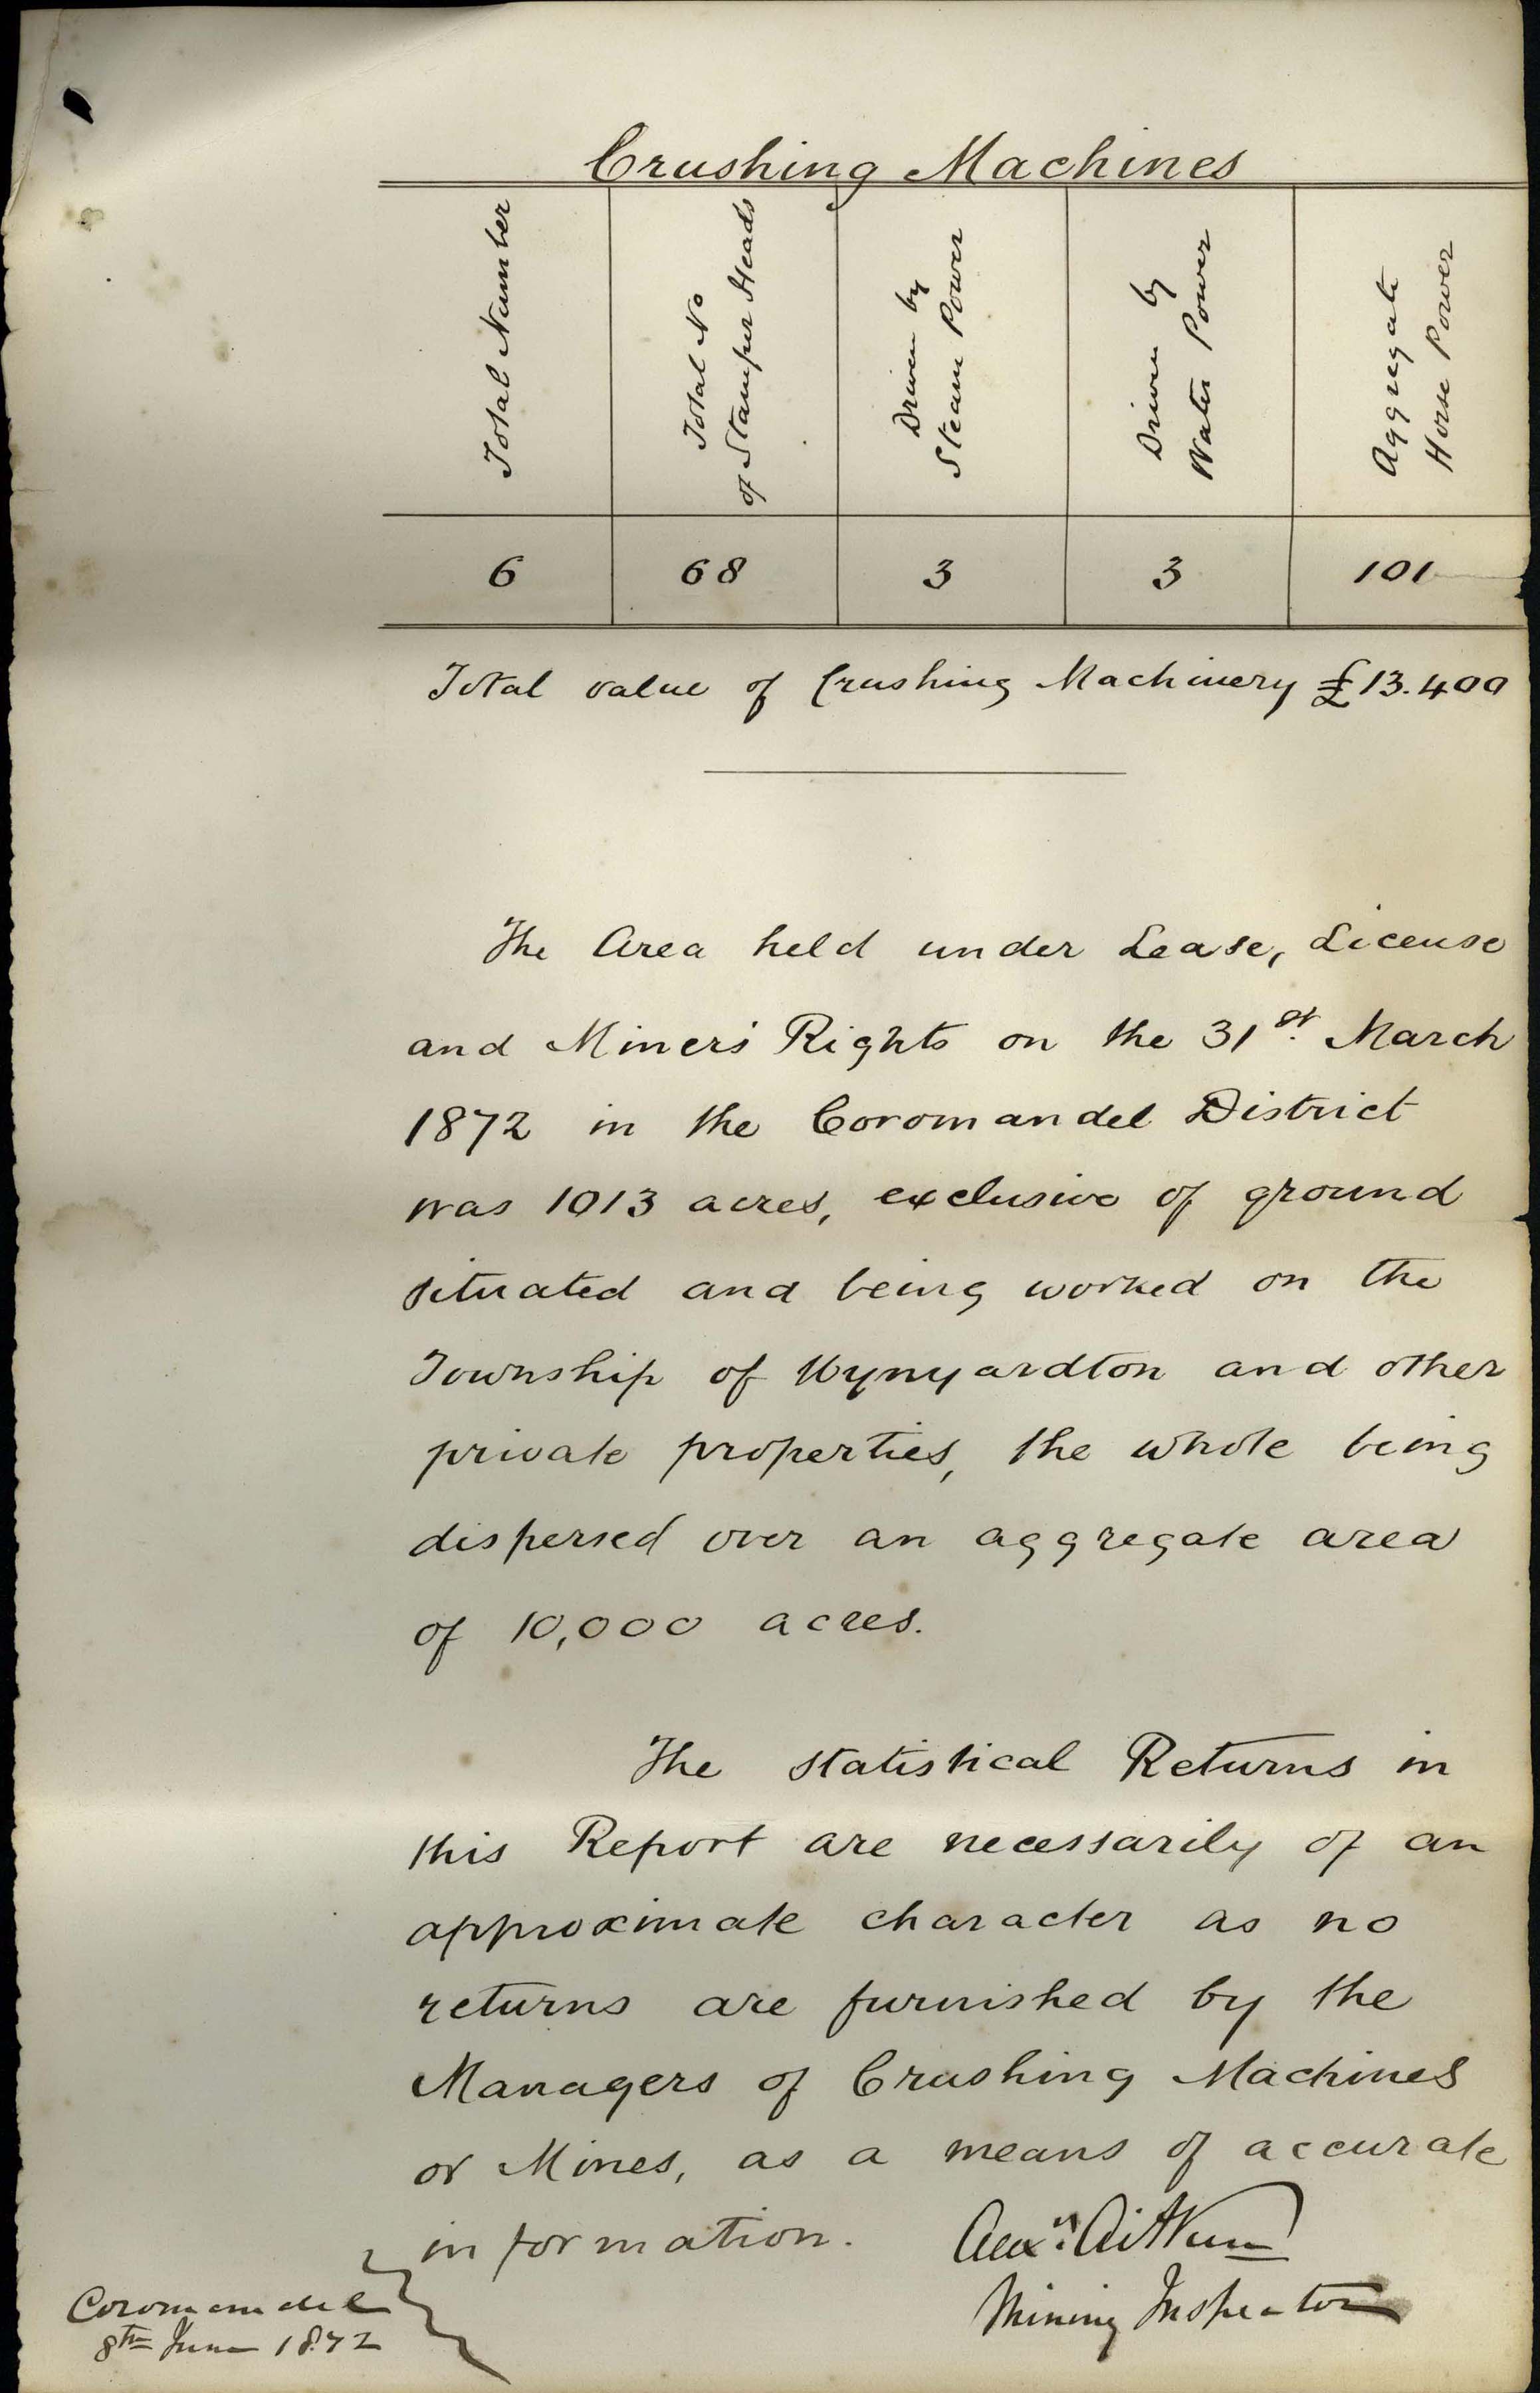 Digitised image of a handwritten mining report